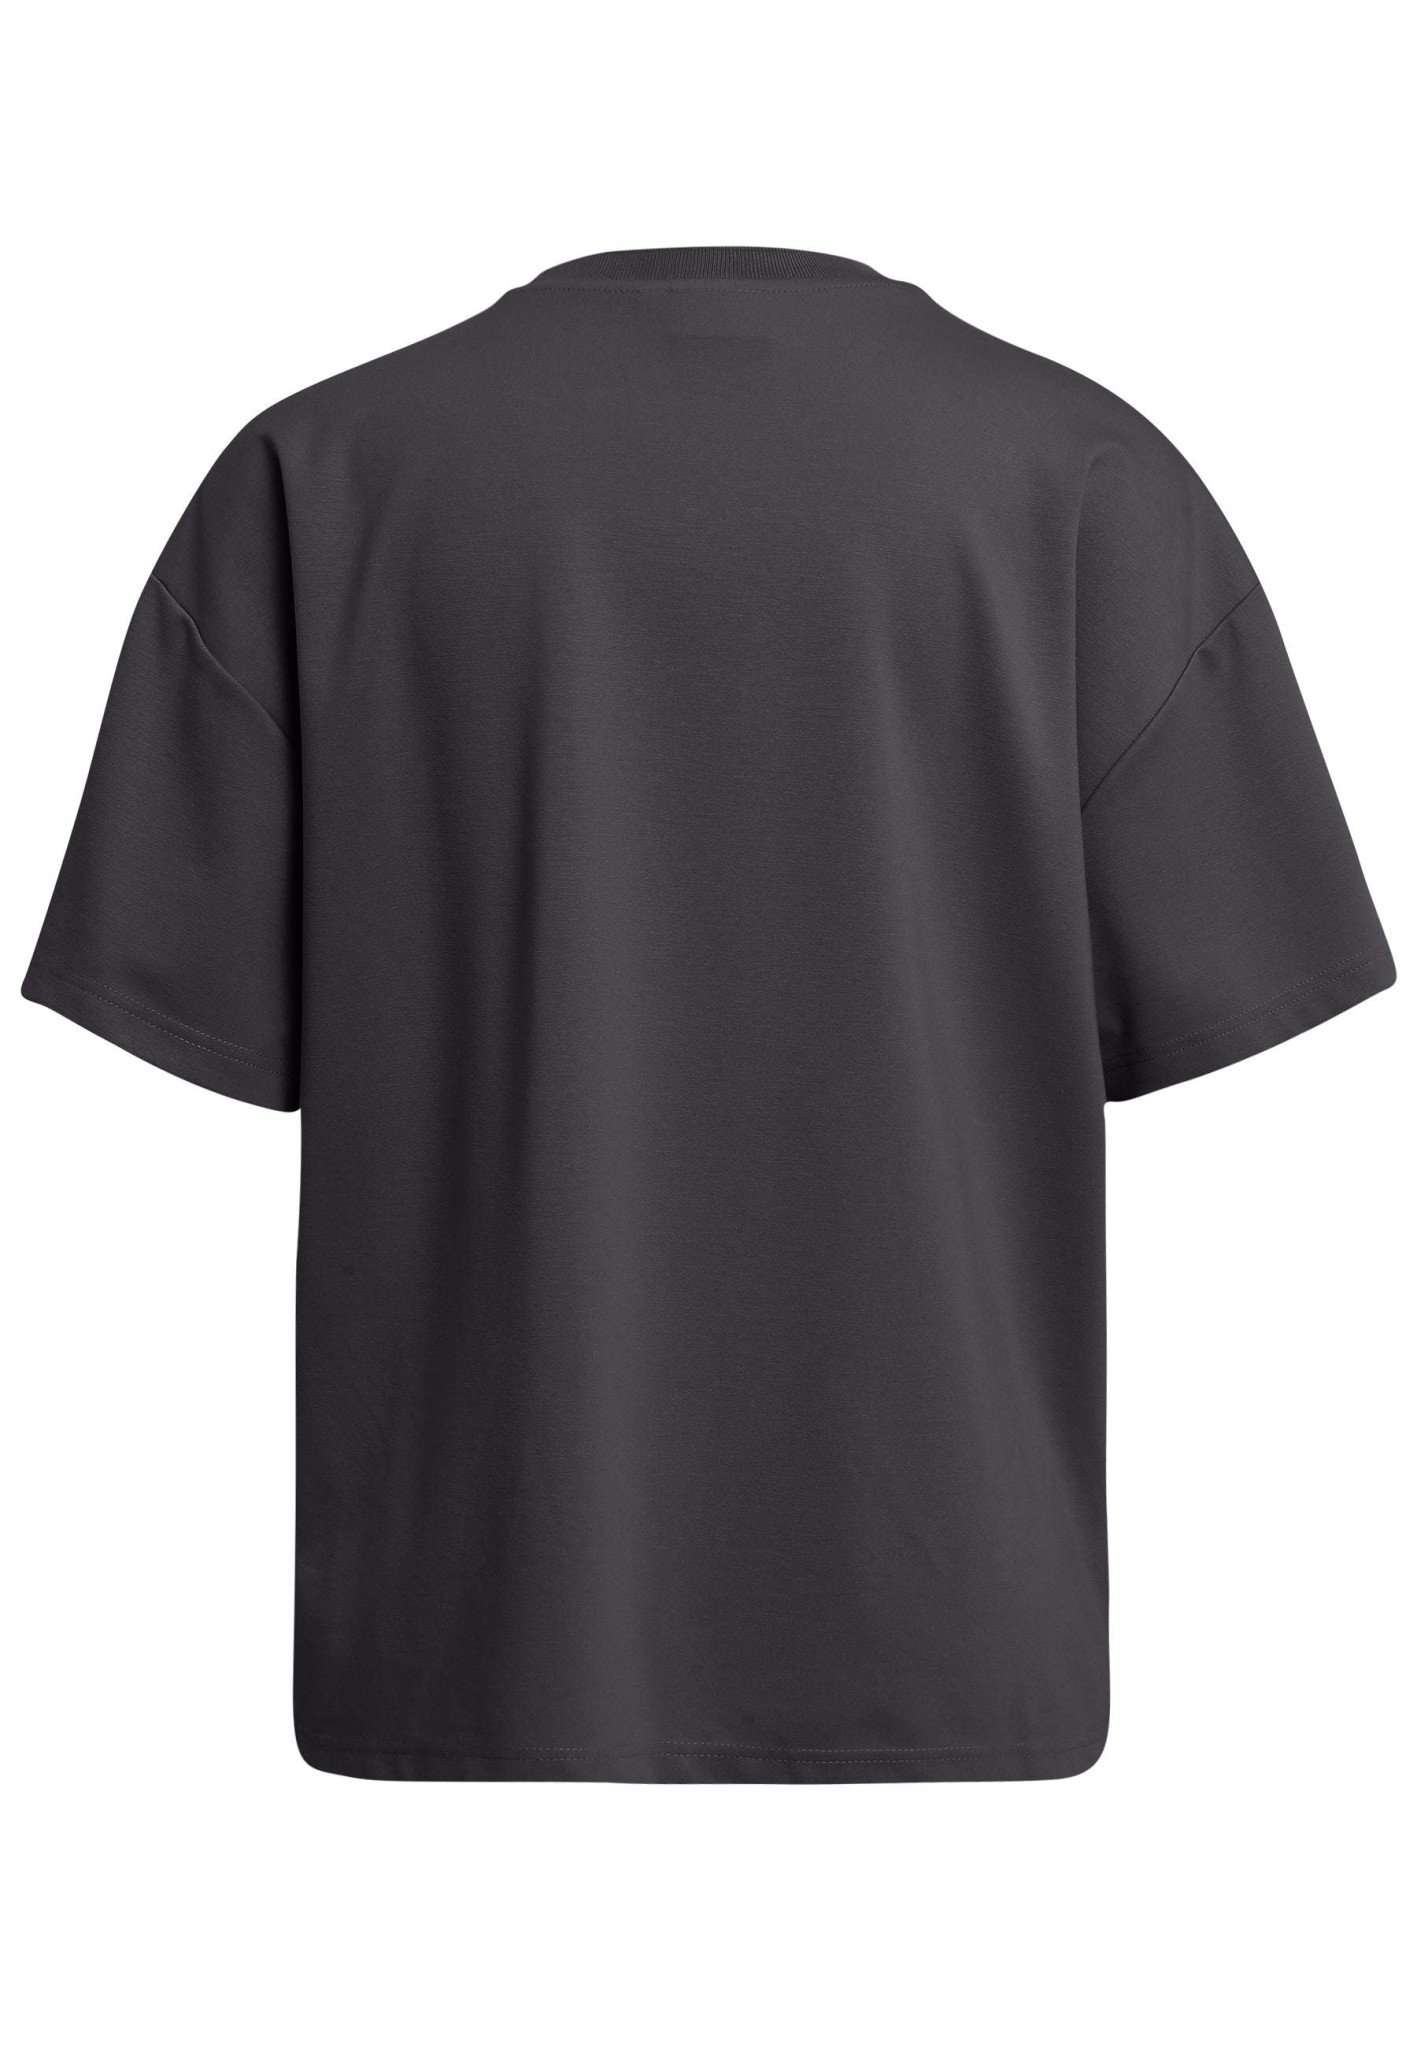 Tula in Black Iris T-Shirts Fila   